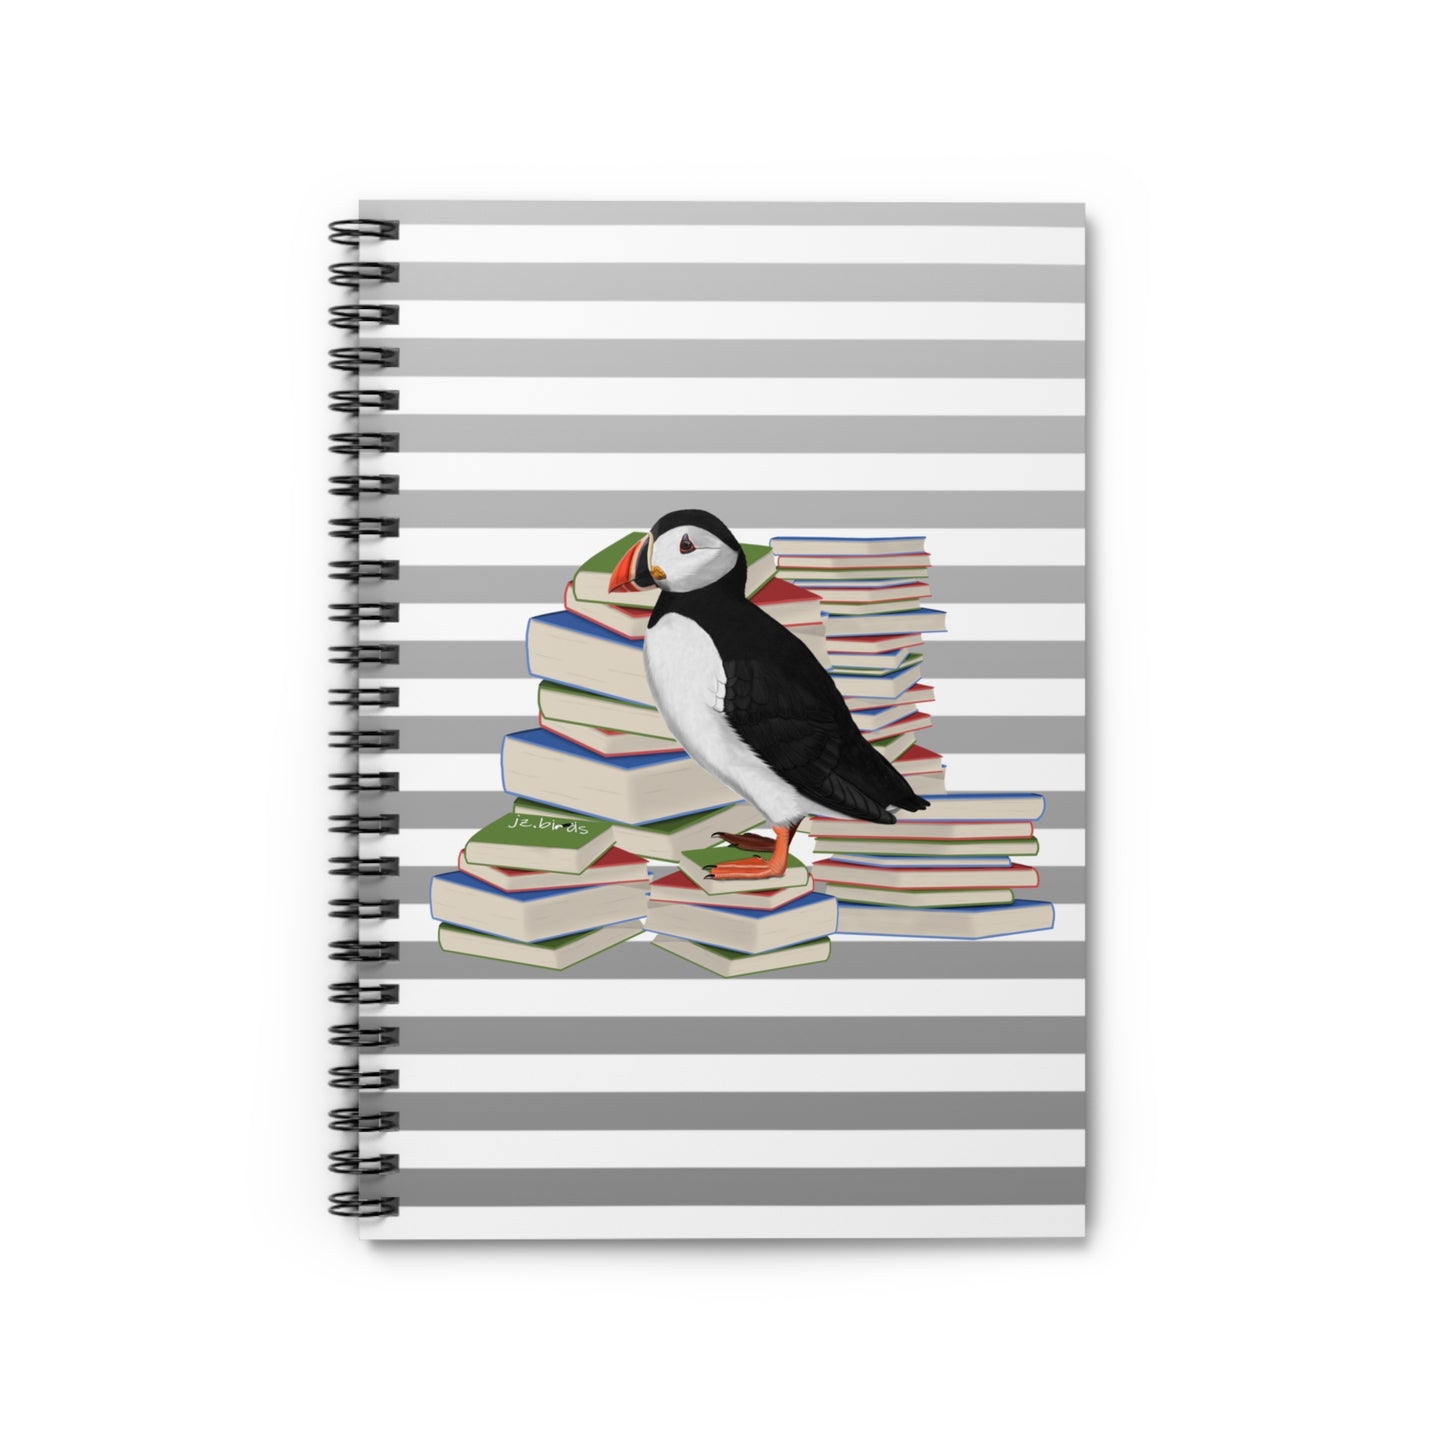 Puffin Bird with Books Birdlover Bookworm Spiral Notebook Ruled Line